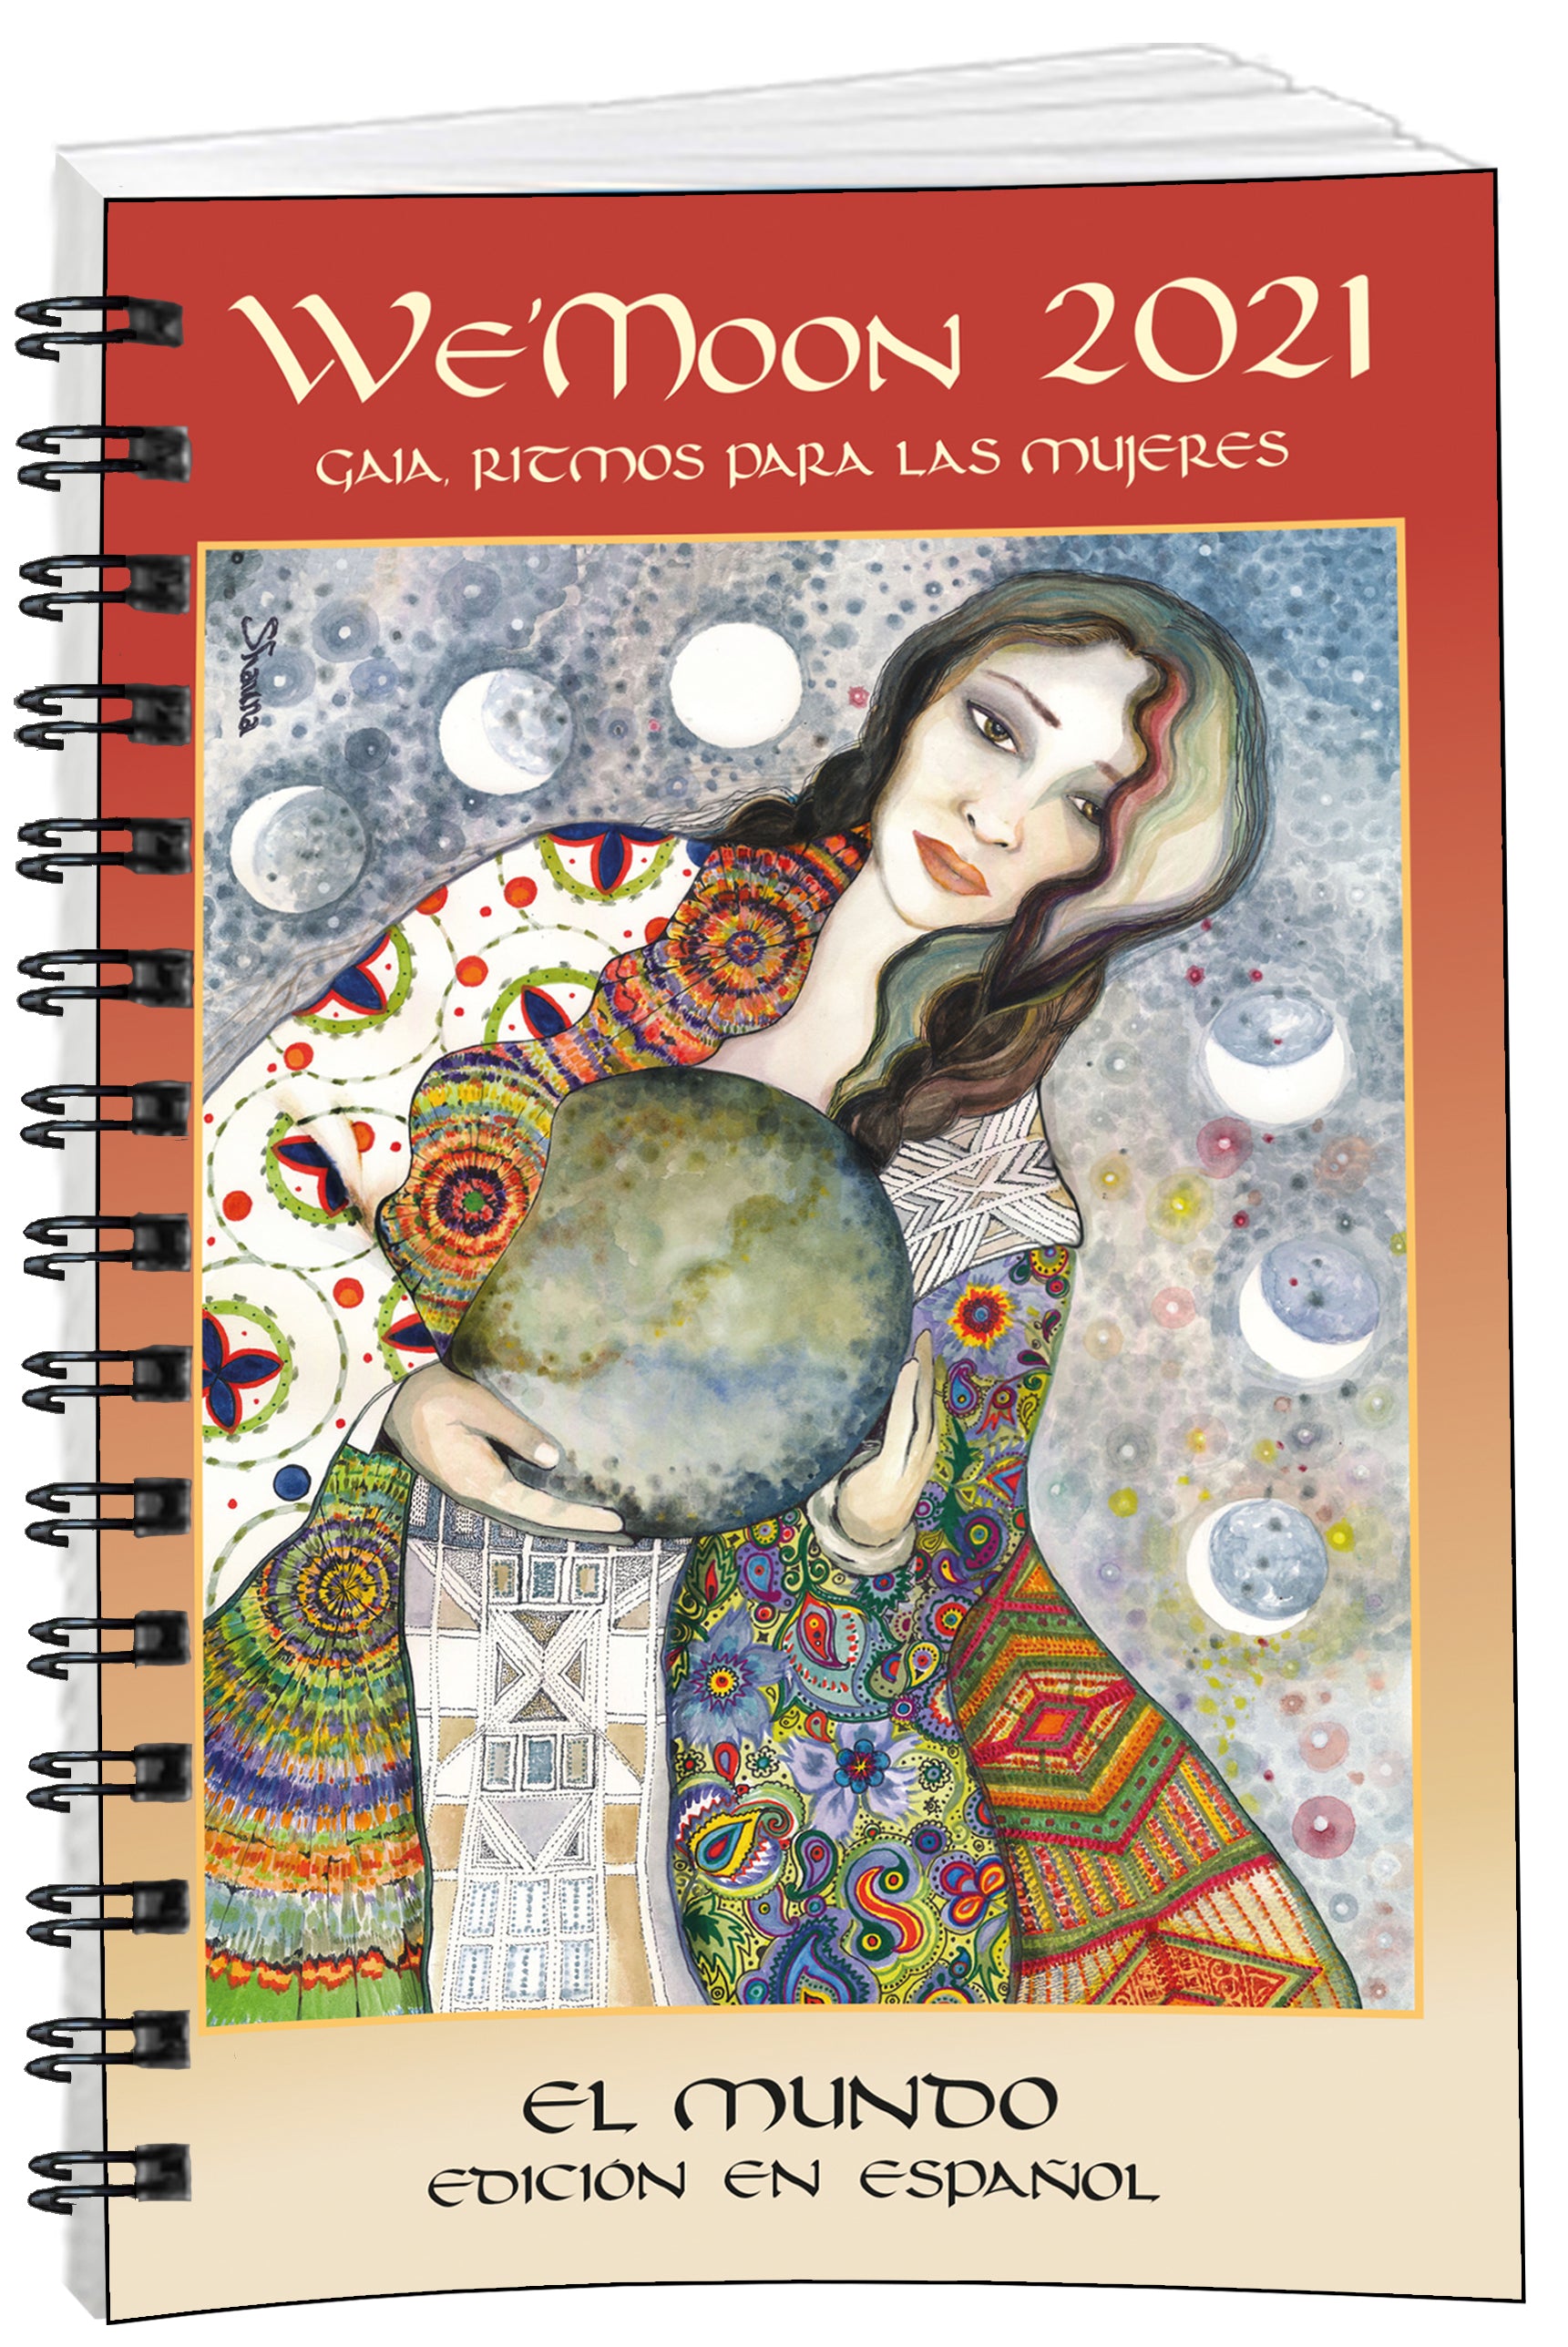 We'Moon: Astrological & Moon Calendar Full of Art & Writing by Women!